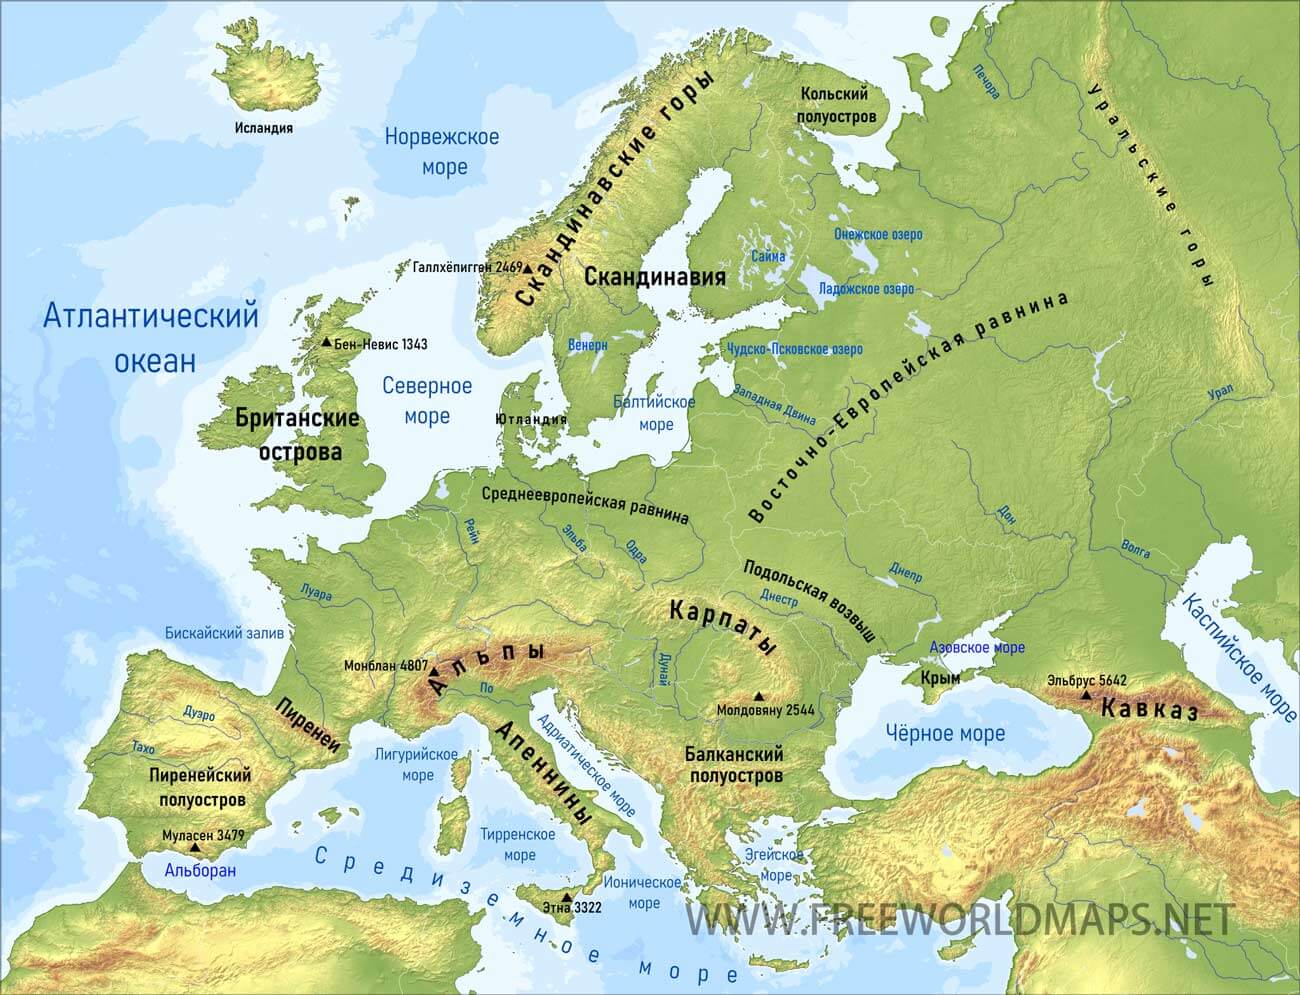 Карты Европы - freeworldmaps.net